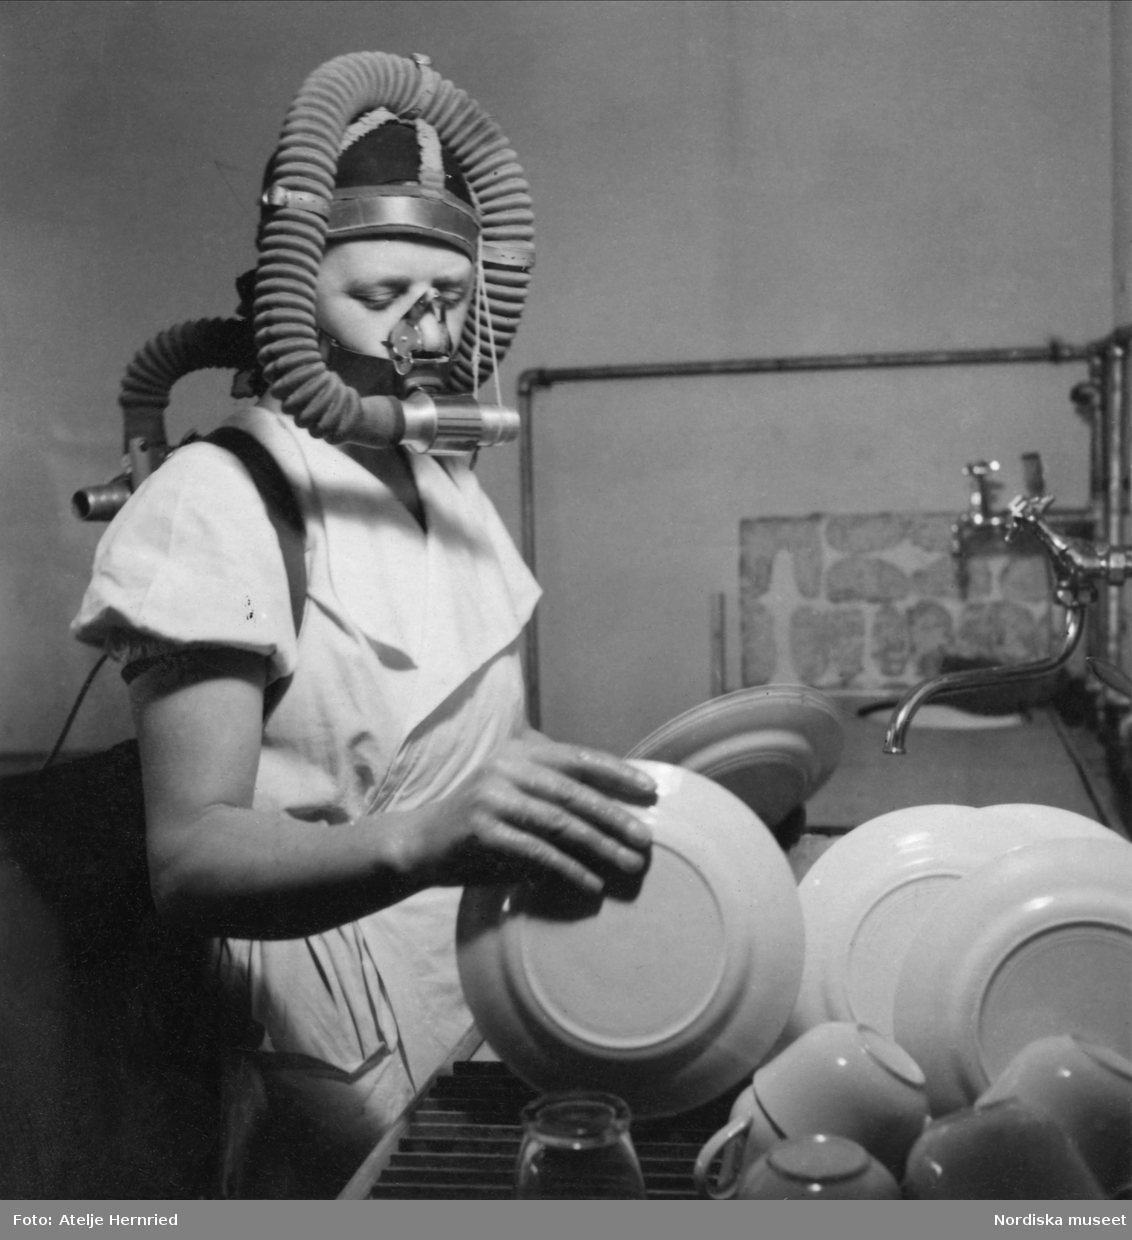 Kvinna i andningsmask diskar i kök. Hemmens forskningsinstitut.